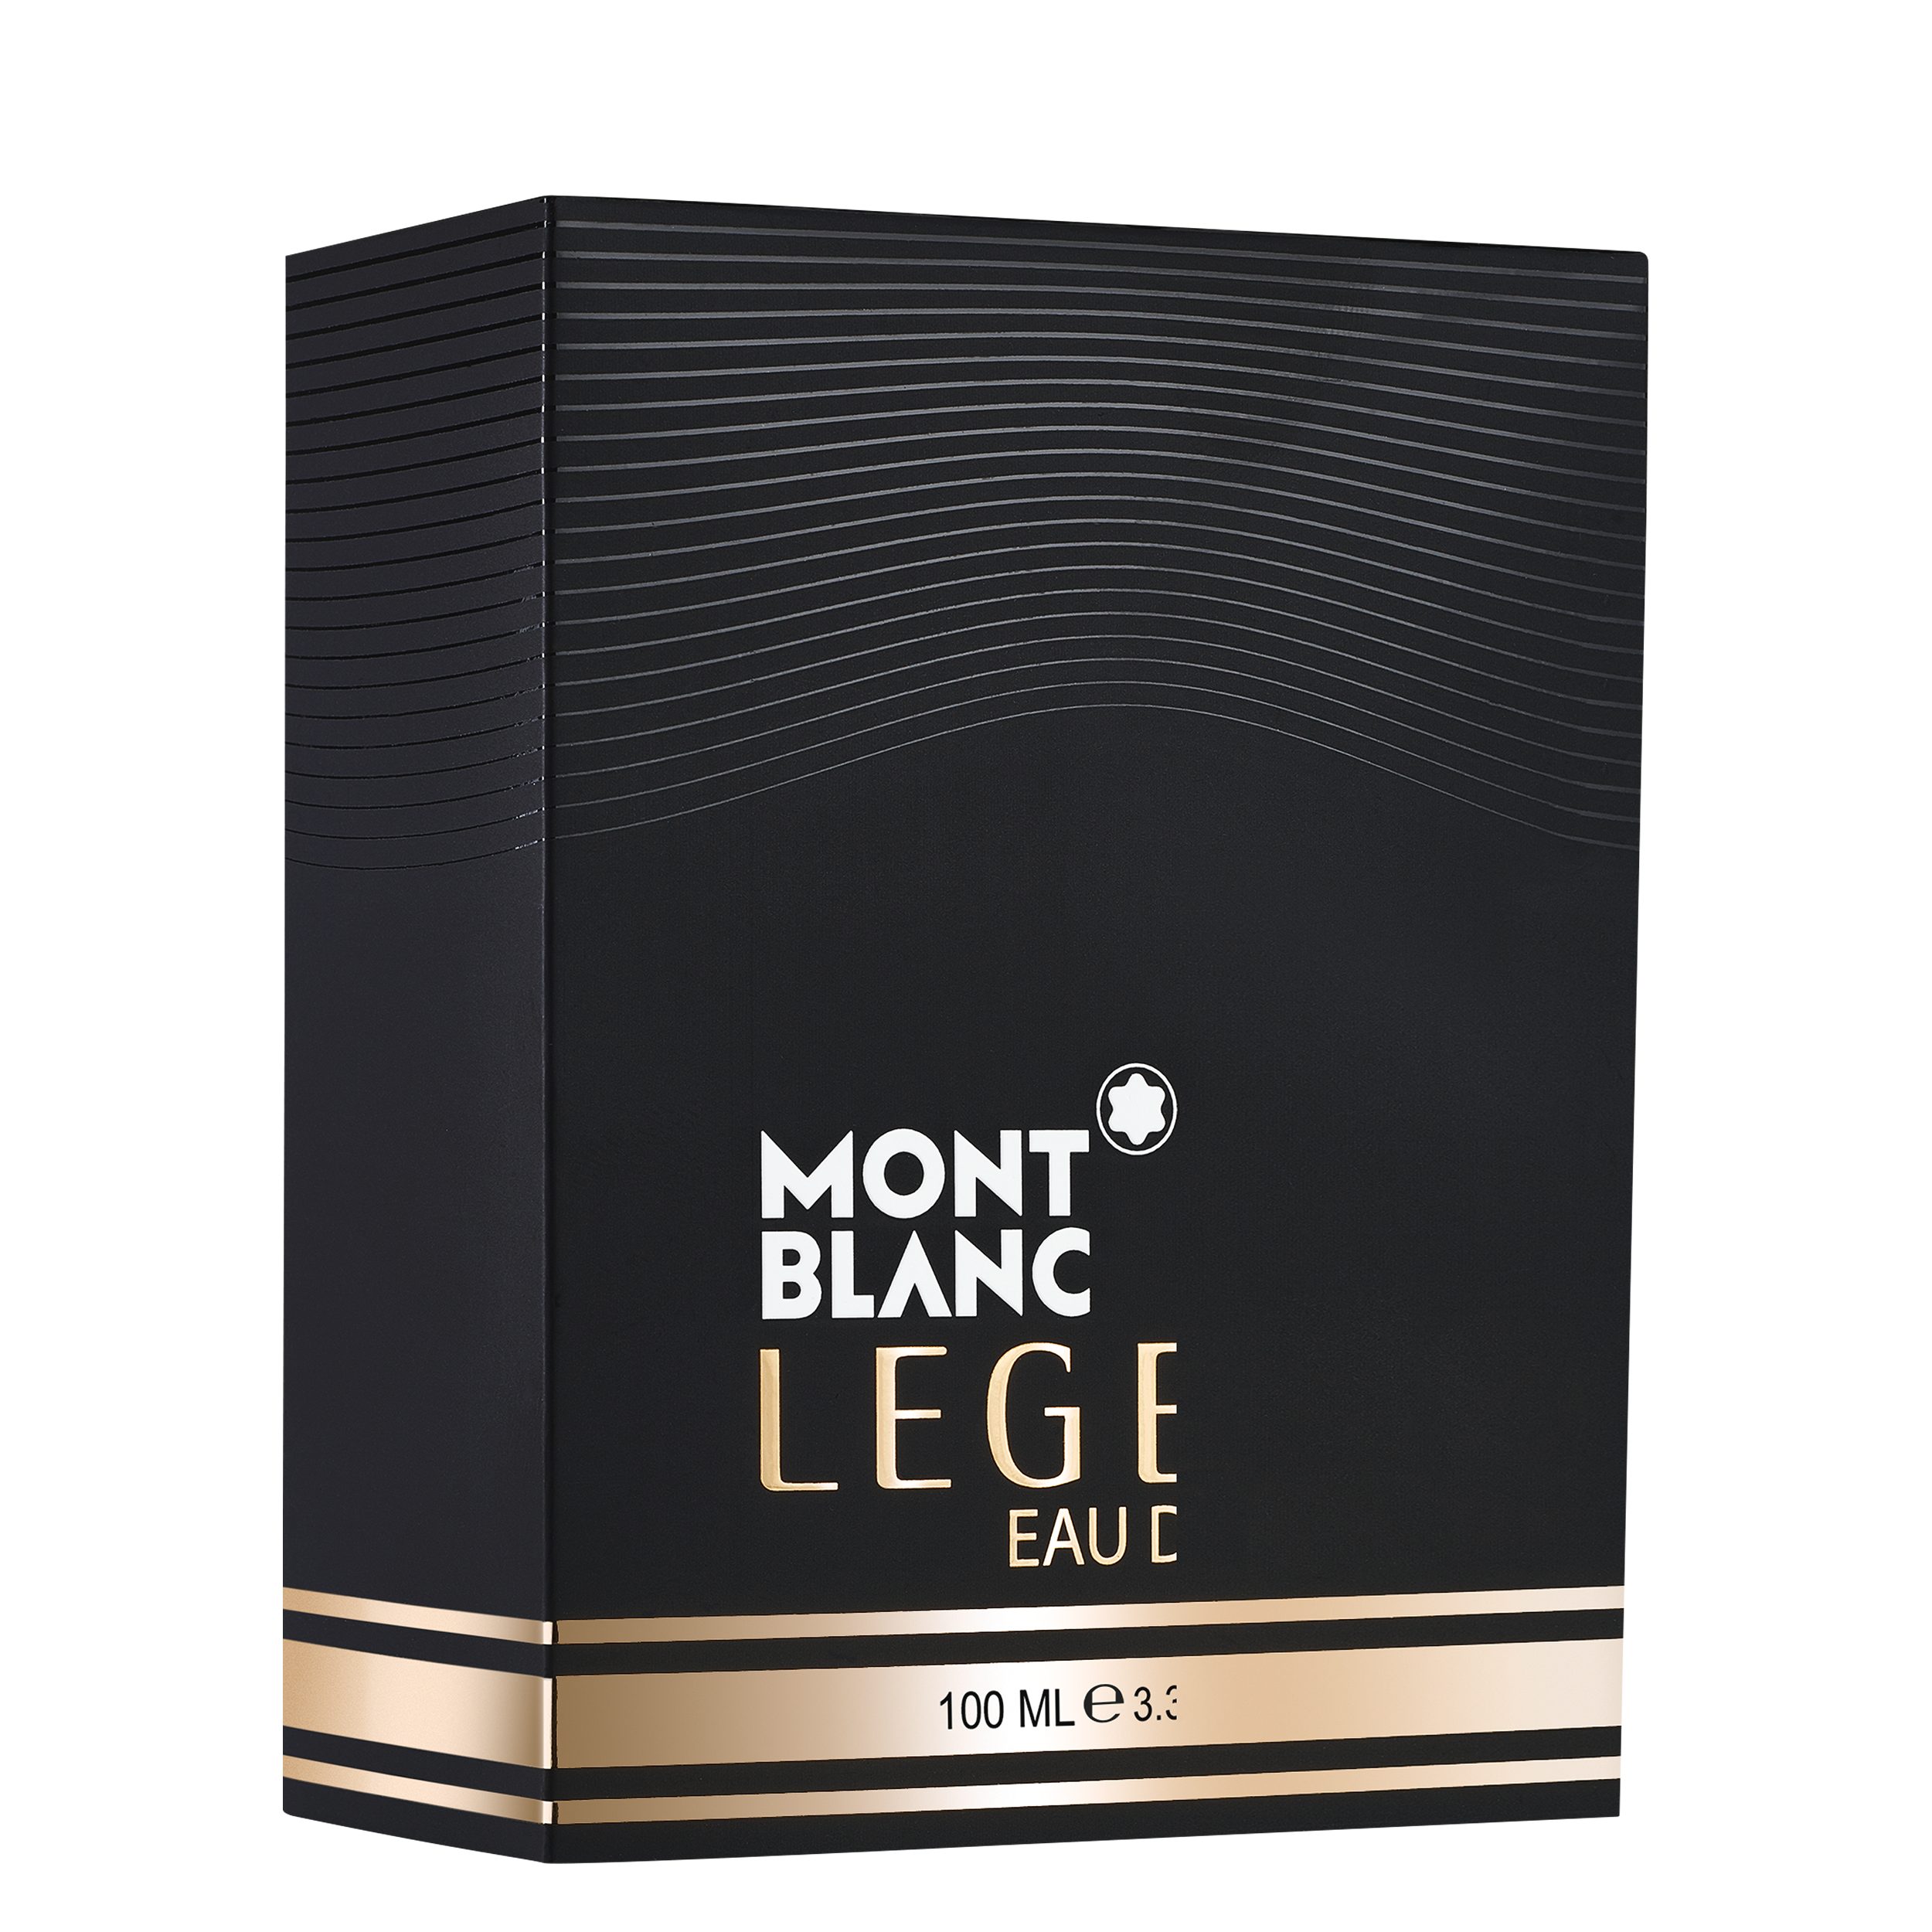 Montblanc Legend 100 ml, image 2